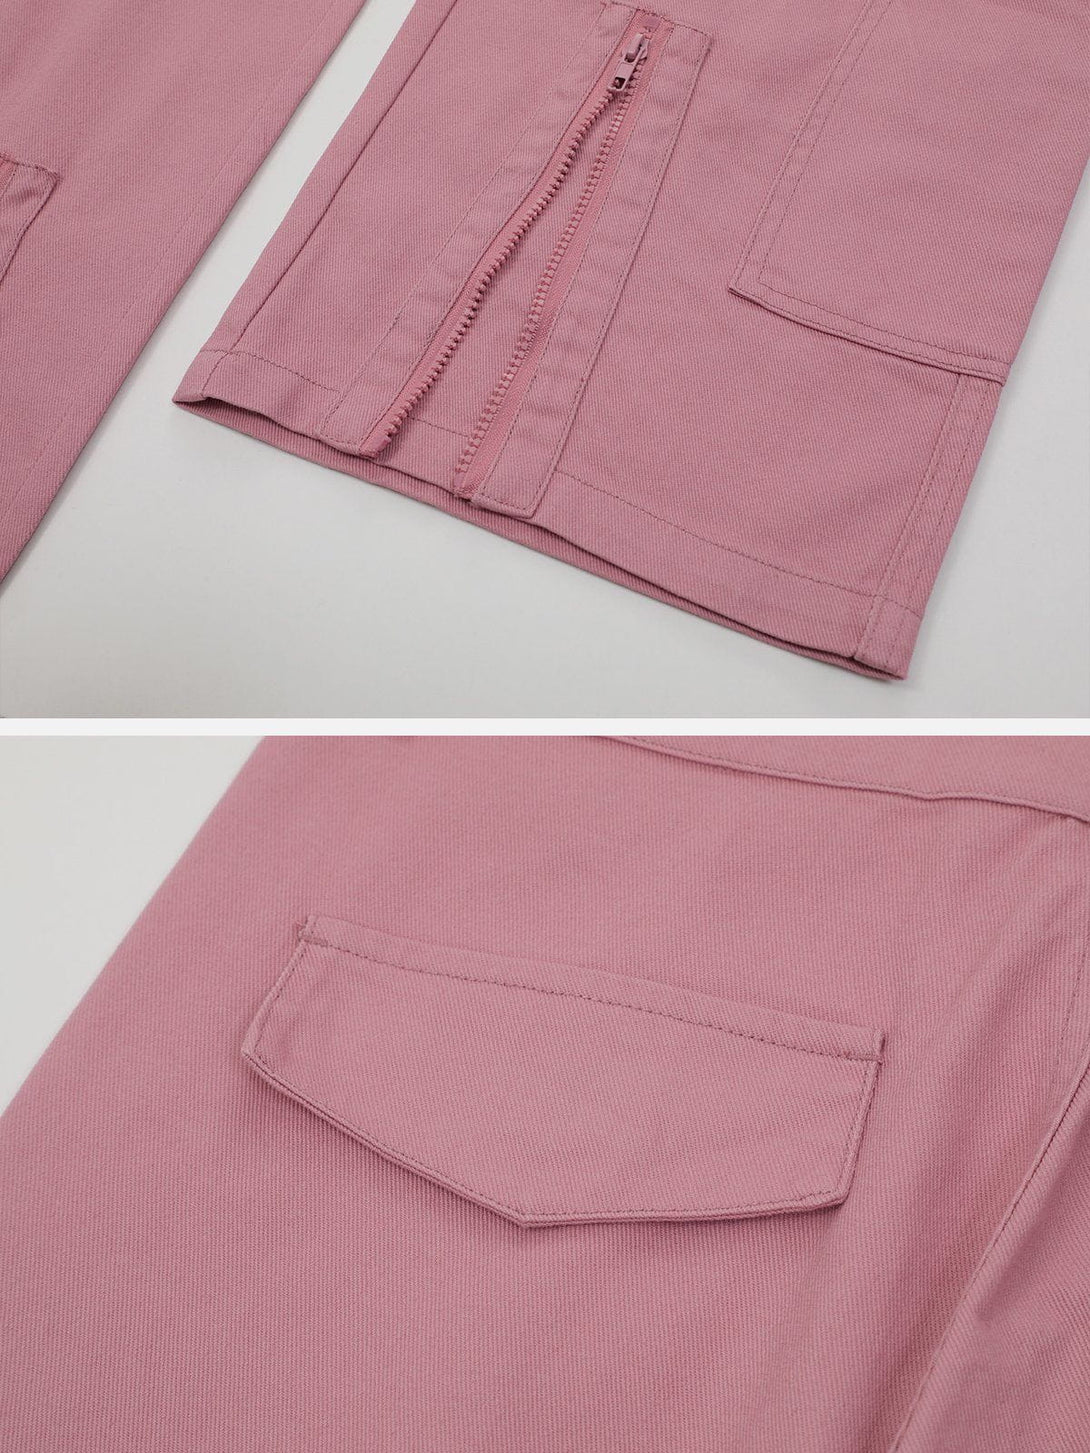 Majesda® - Multi-Pocket Split Pants outfit ideas streetwear fashion